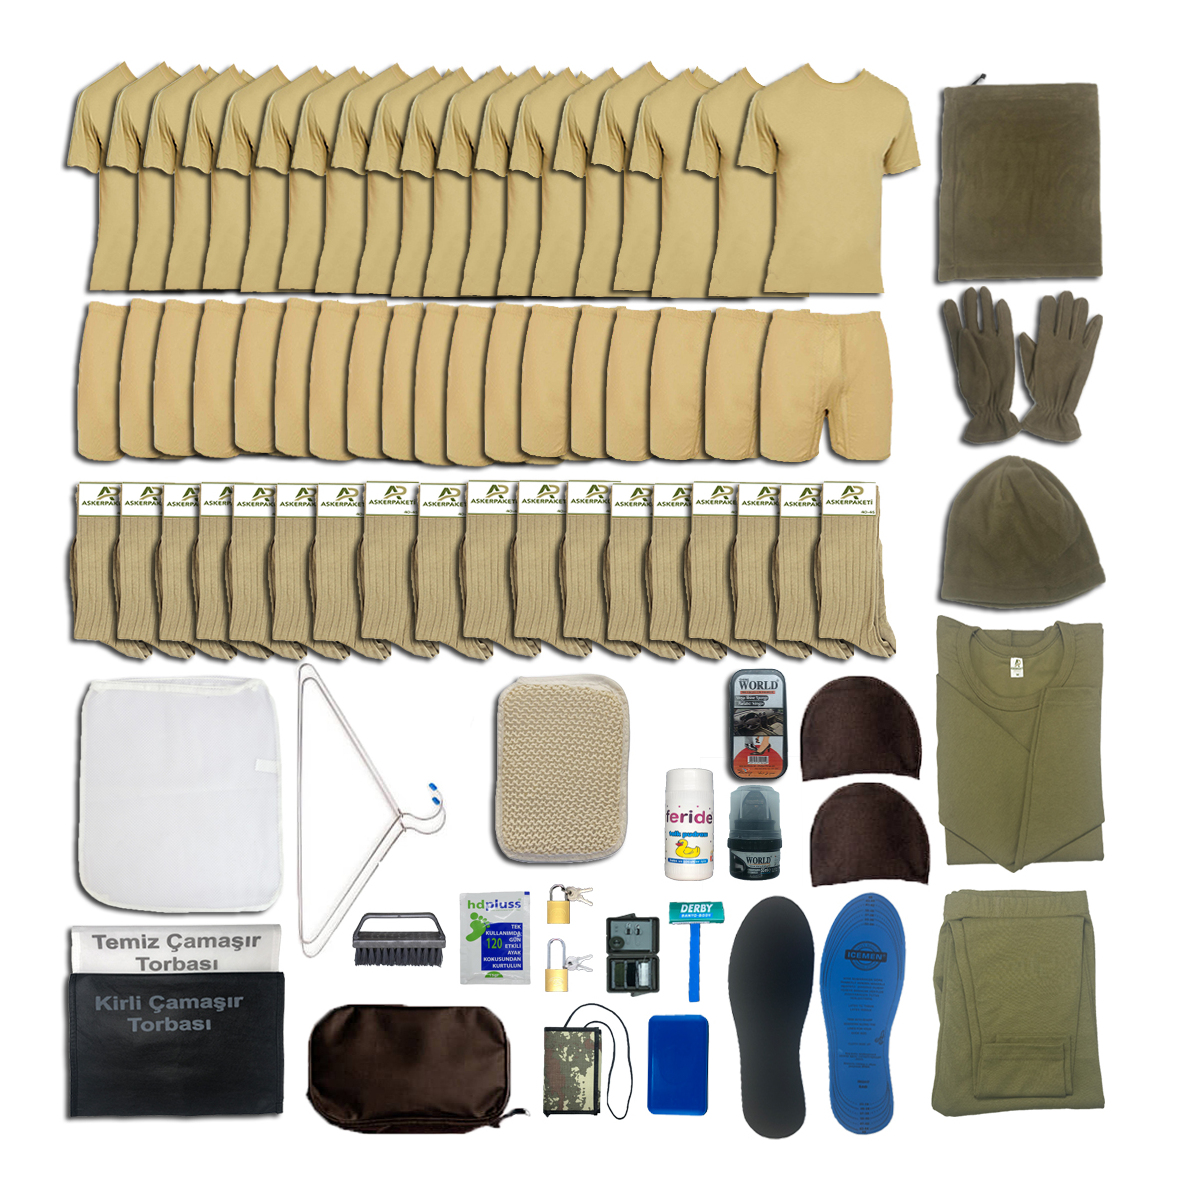 18’Li Kışlık Temel Asker Seti: Bedelli Asker Malzeme Paketi